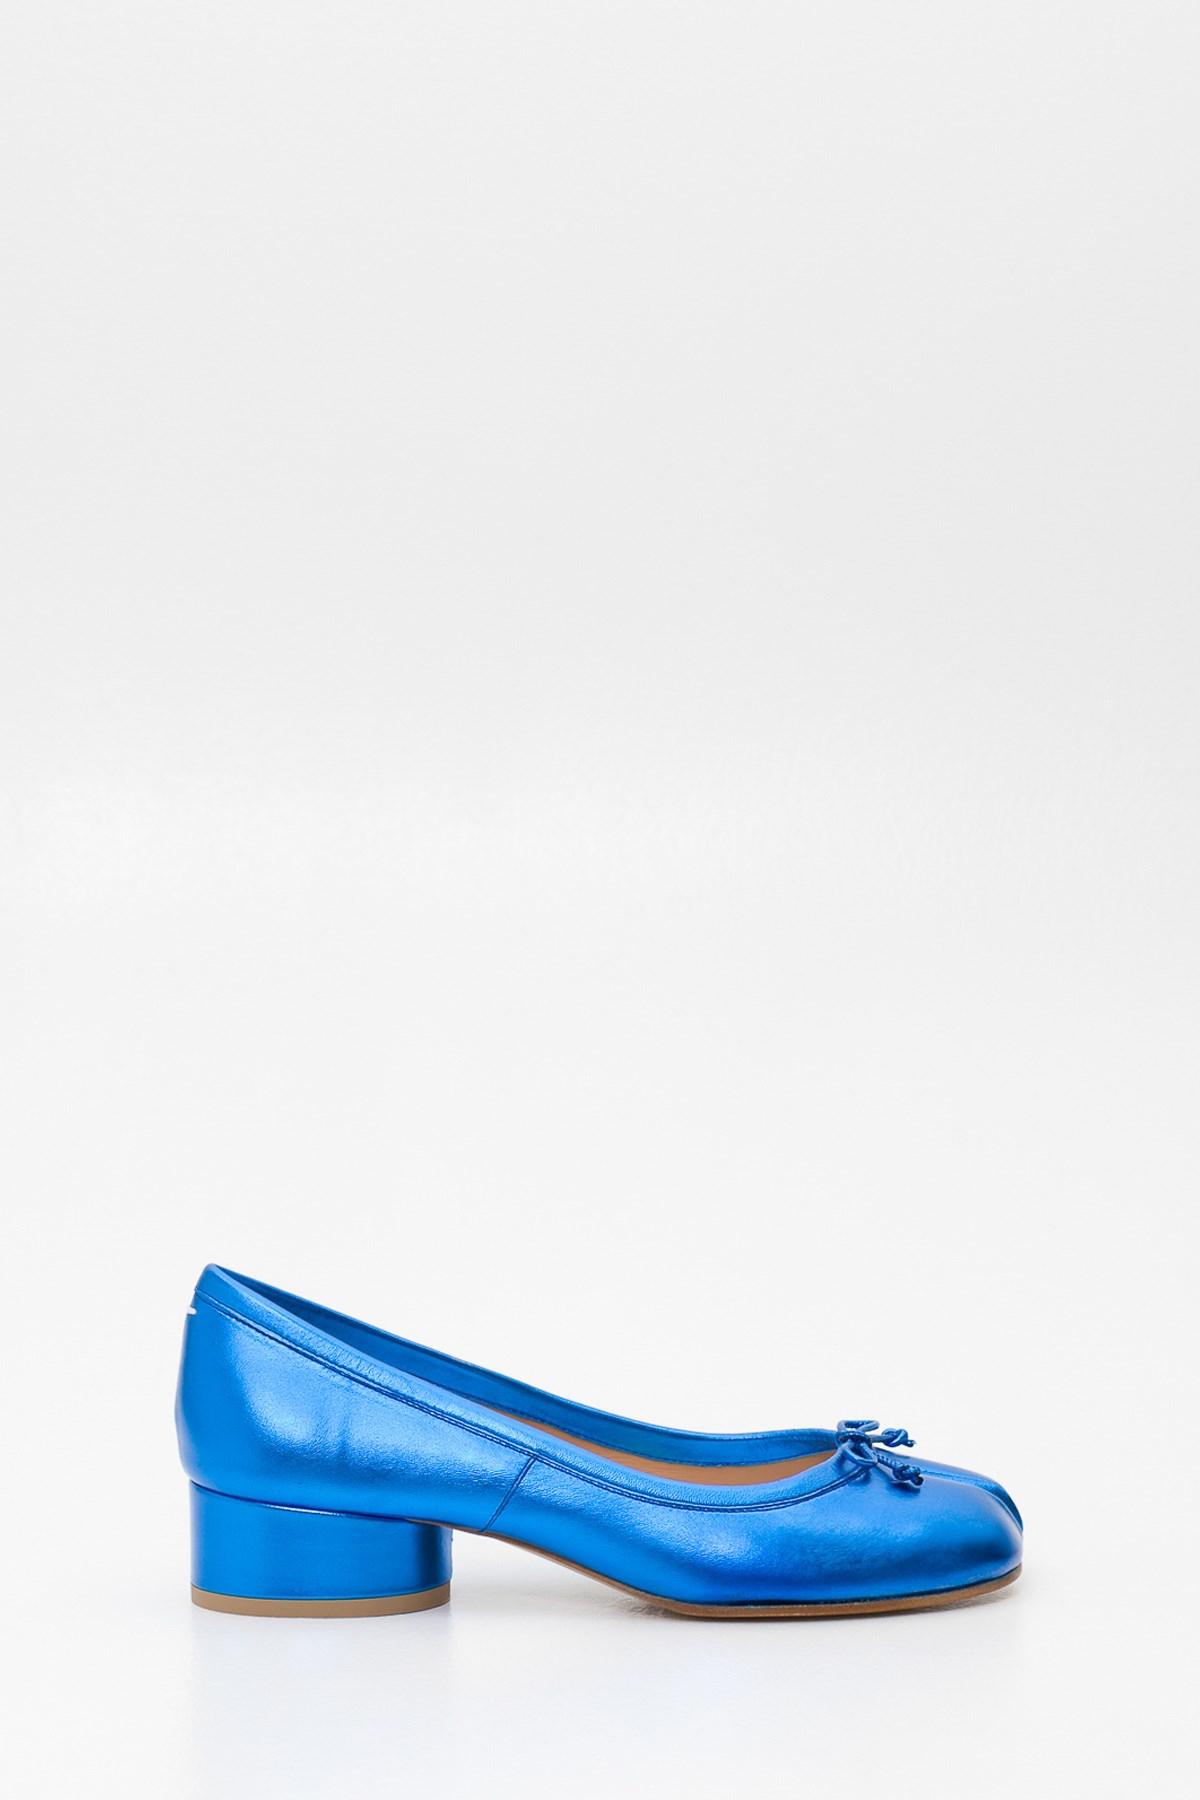 Maison Margiela Leather Tabi Ballerina Pumps in Blue -